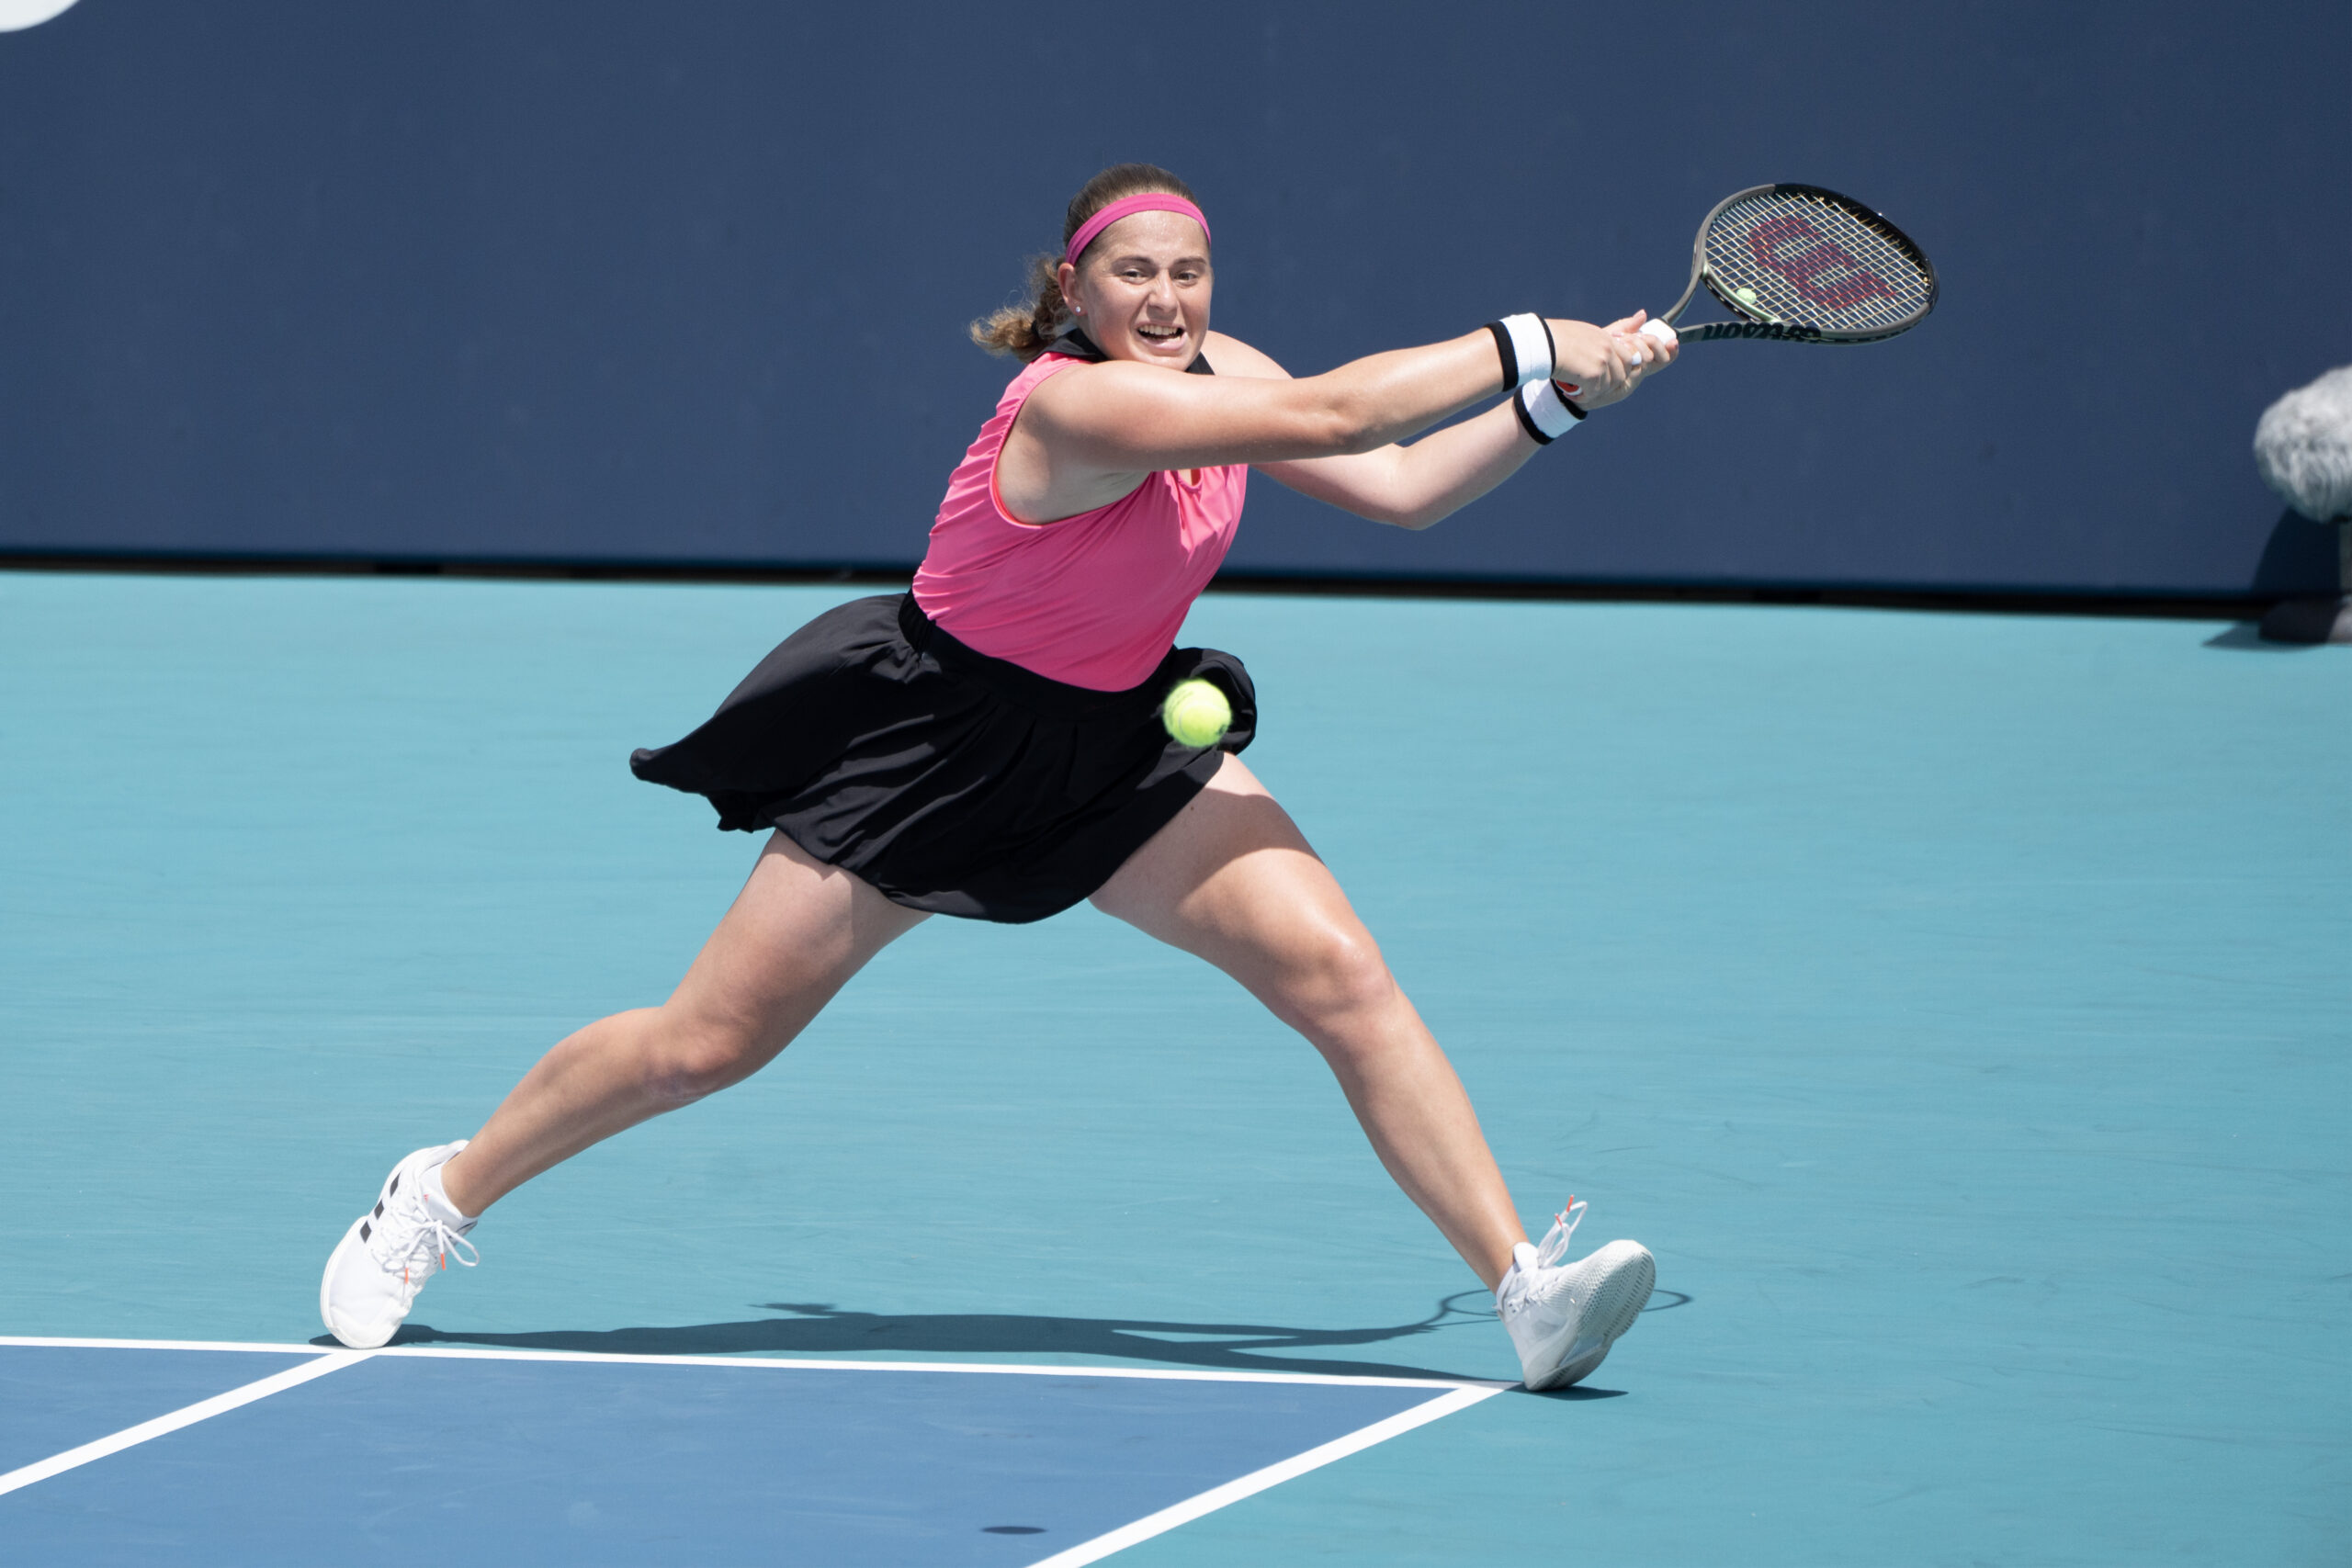 Jelena Ostapenko on March 27, 2023 at the Miami Open